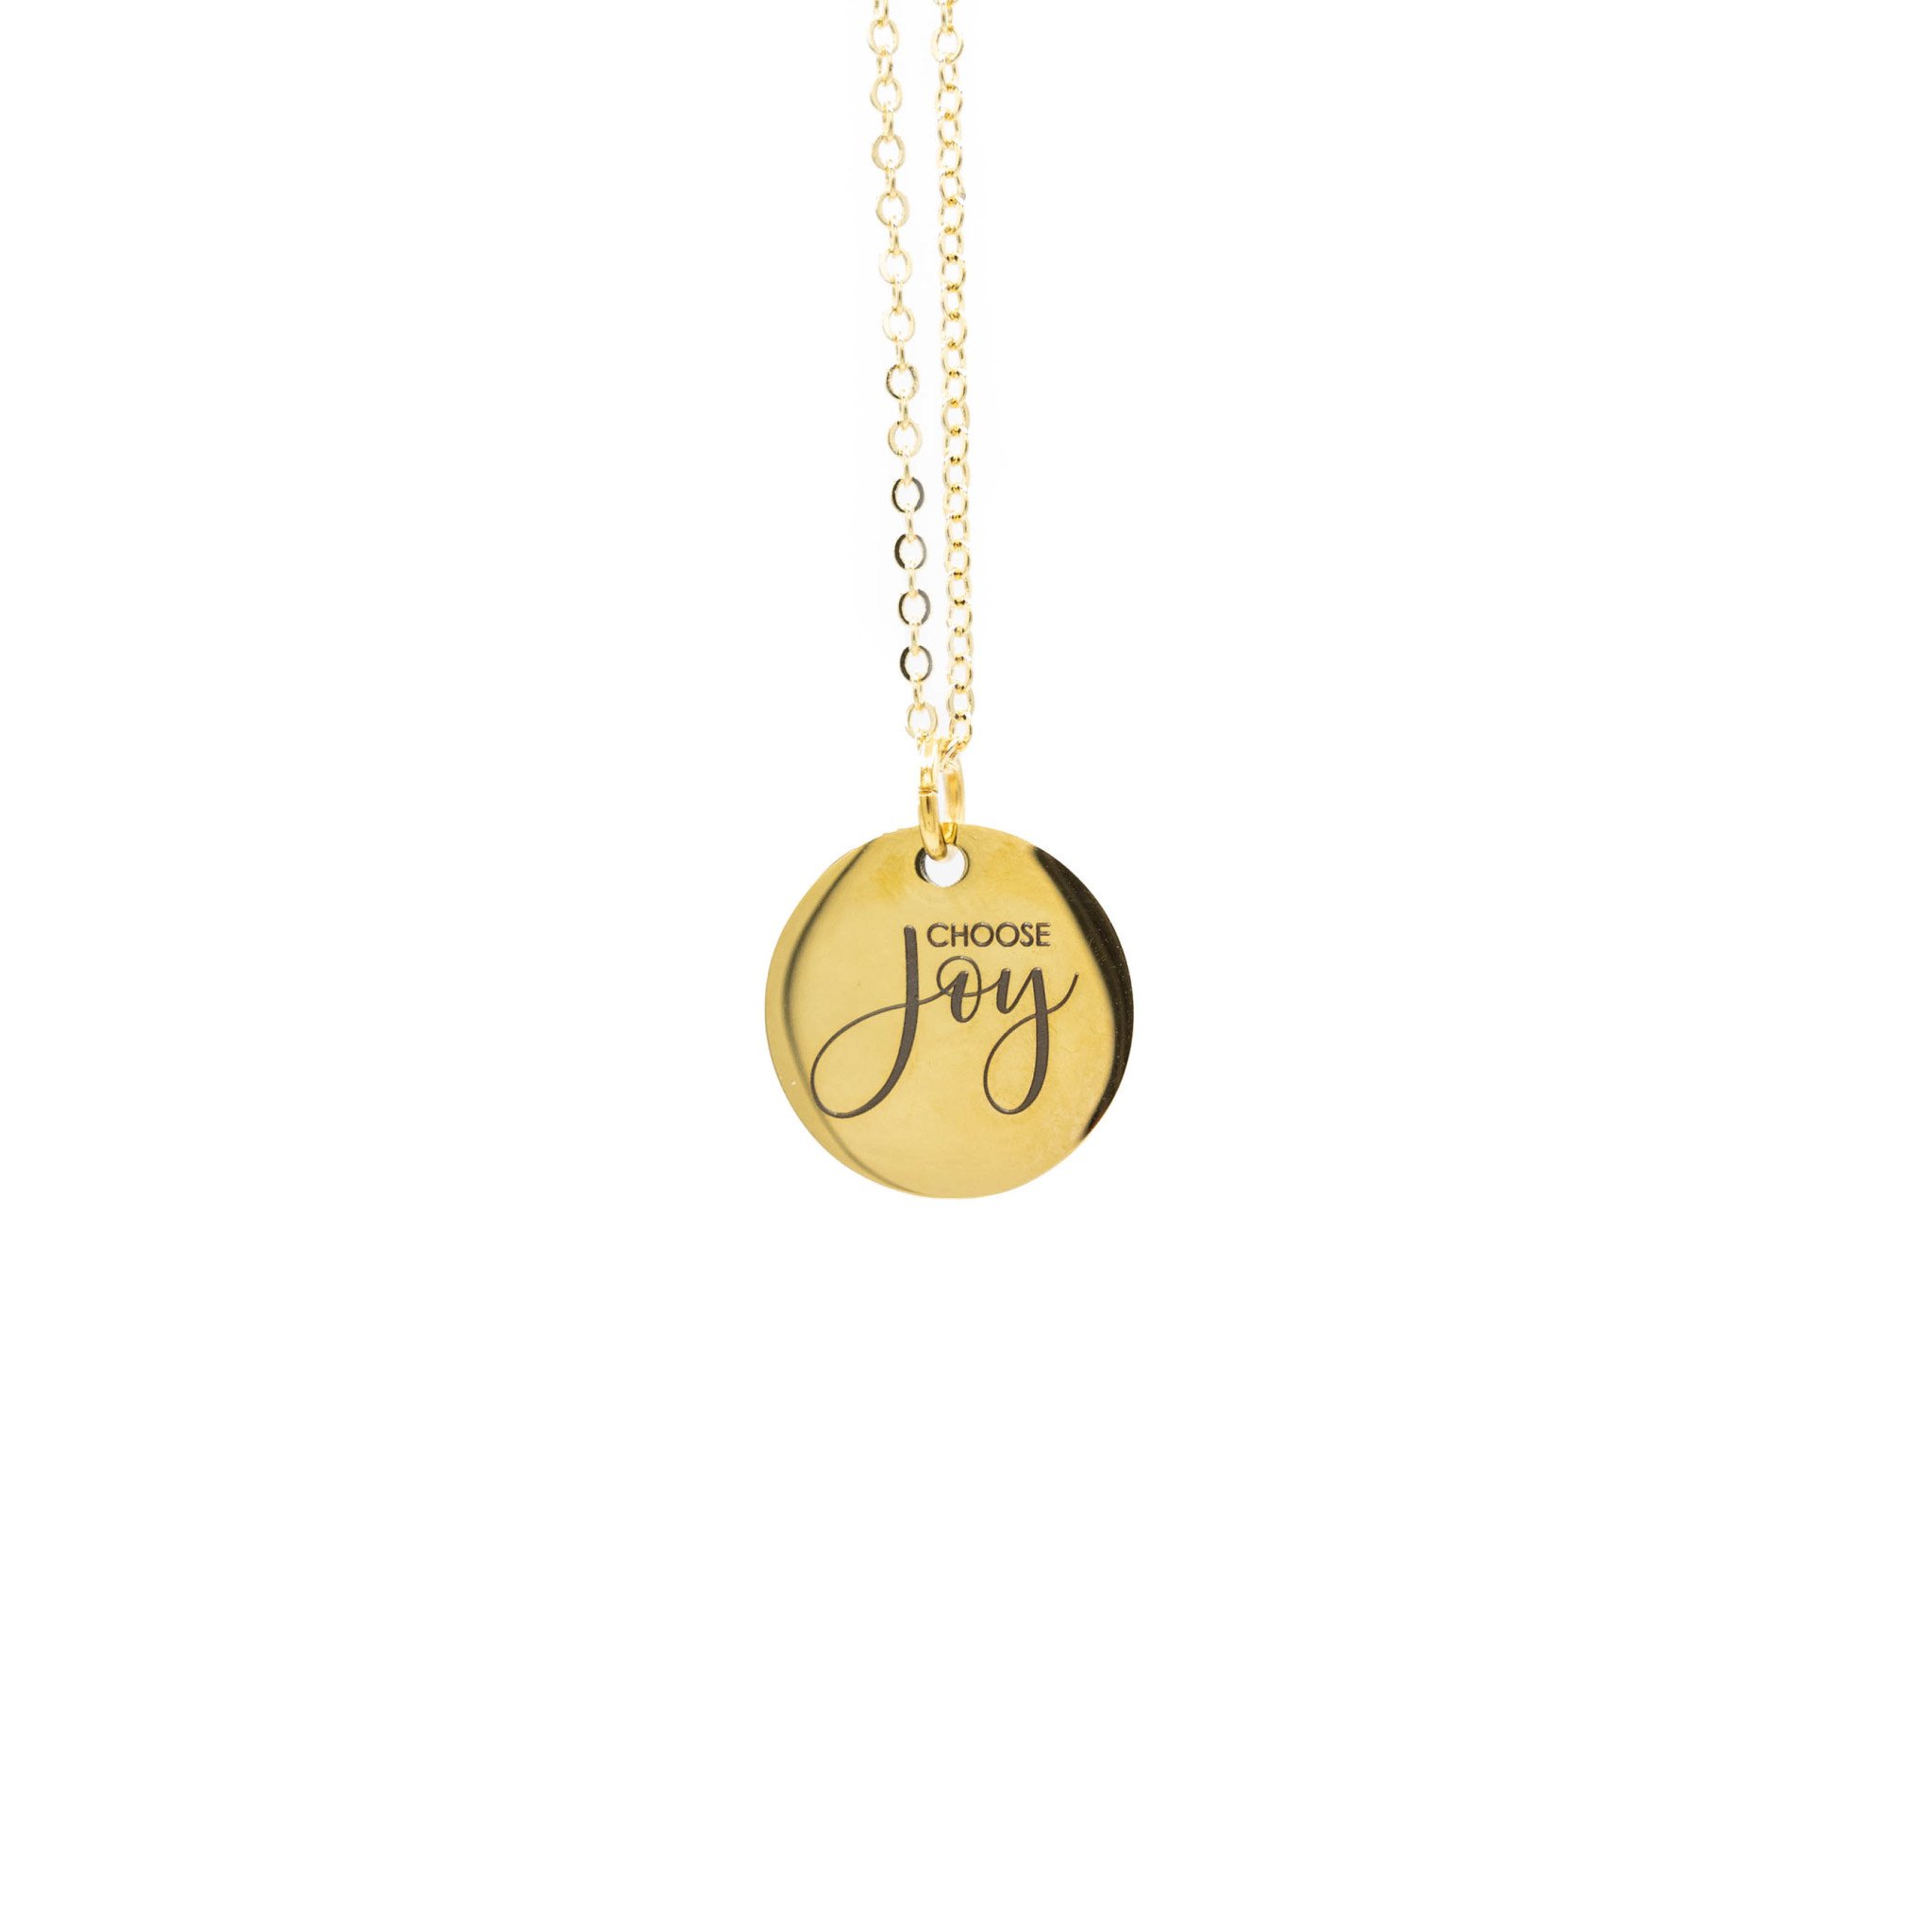 Find Joy - Gold Necklace - Paparazzi Accessories